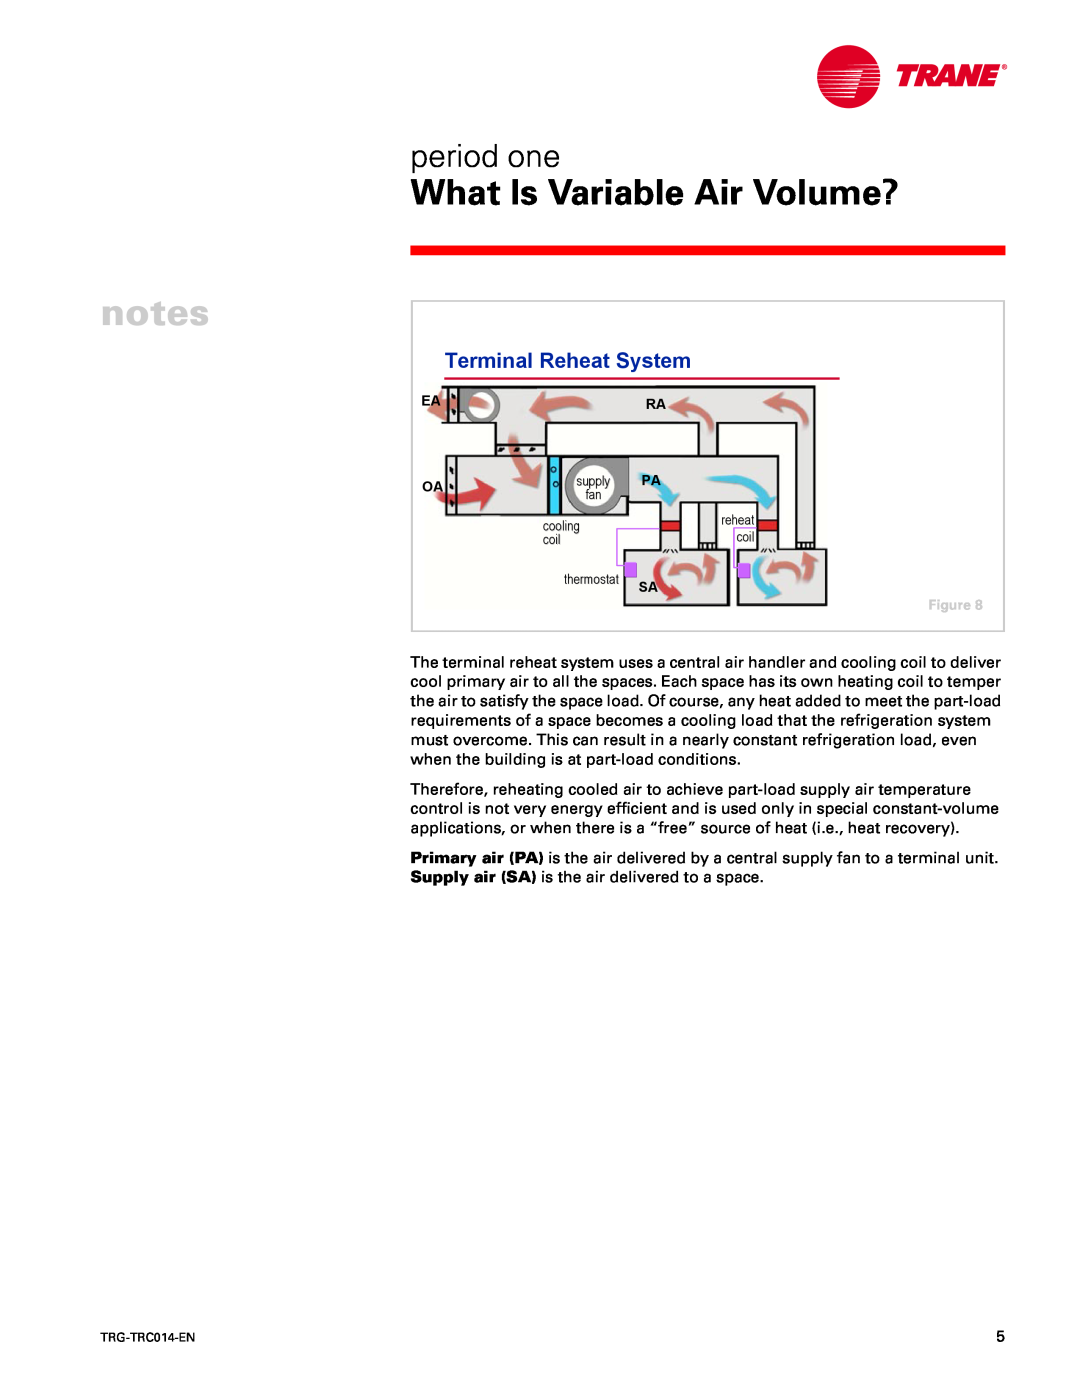 Trane TRG-TRC014-EN manual Terminal Reheat System, What Is Variable Air Volume?, period one 